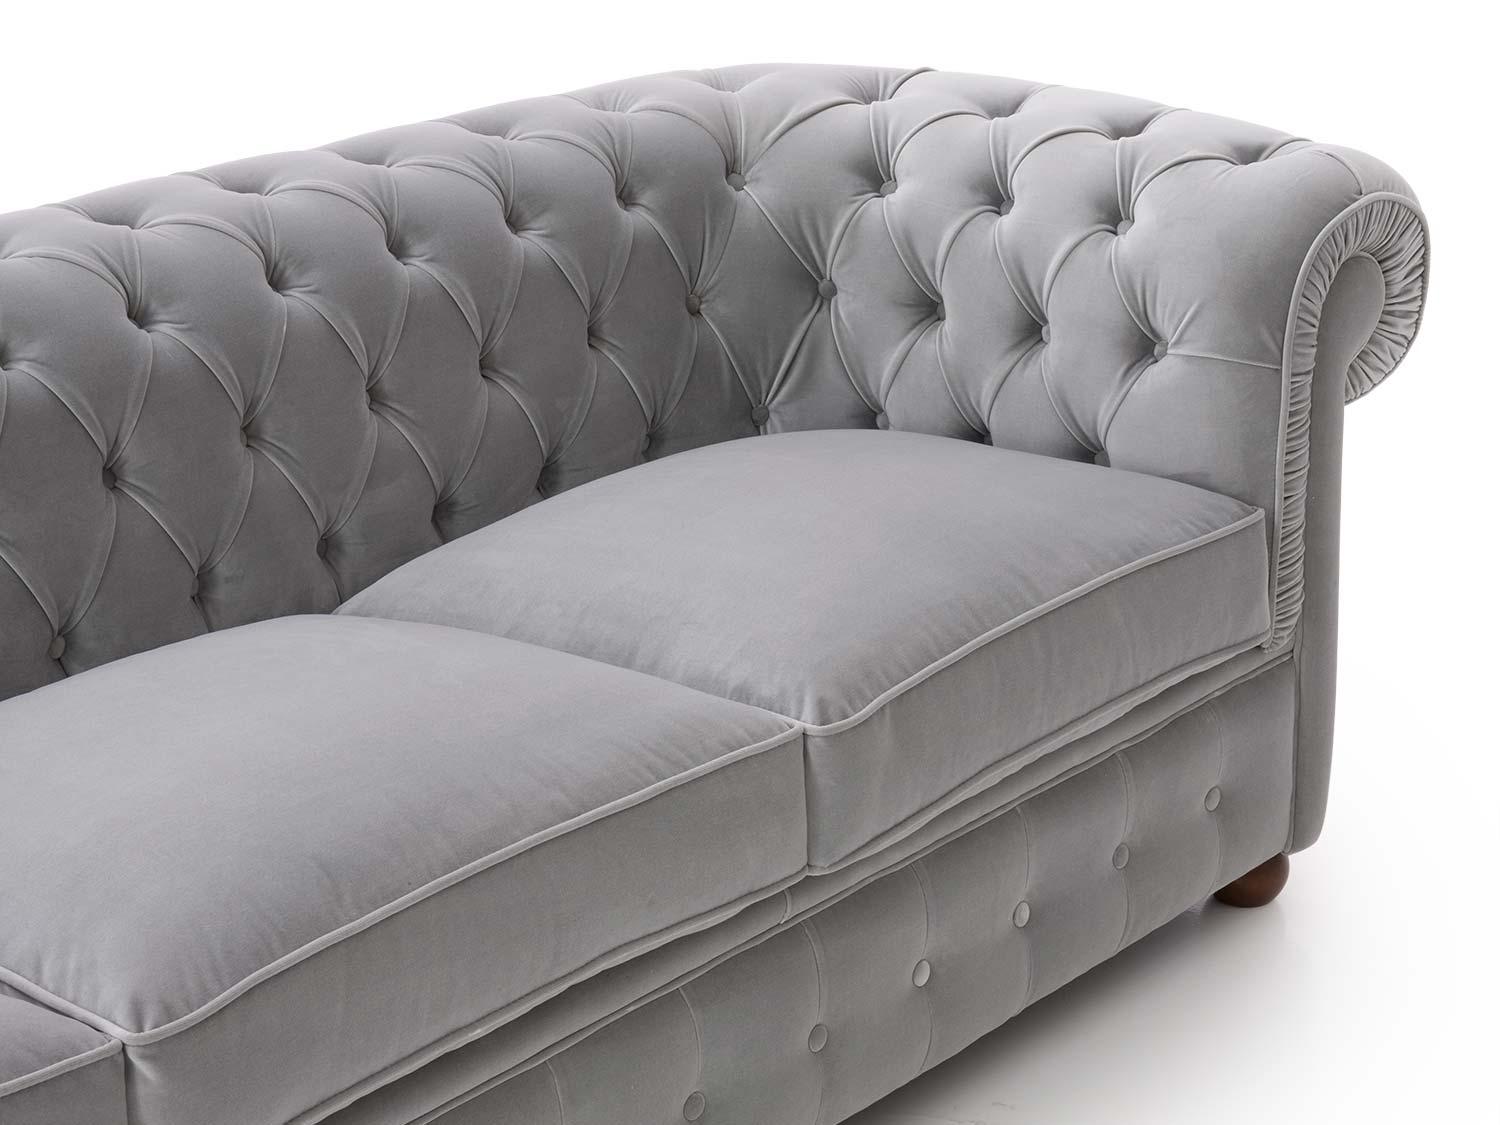 Chester classic leather Chesterfield sofa | DIOTTI.COM